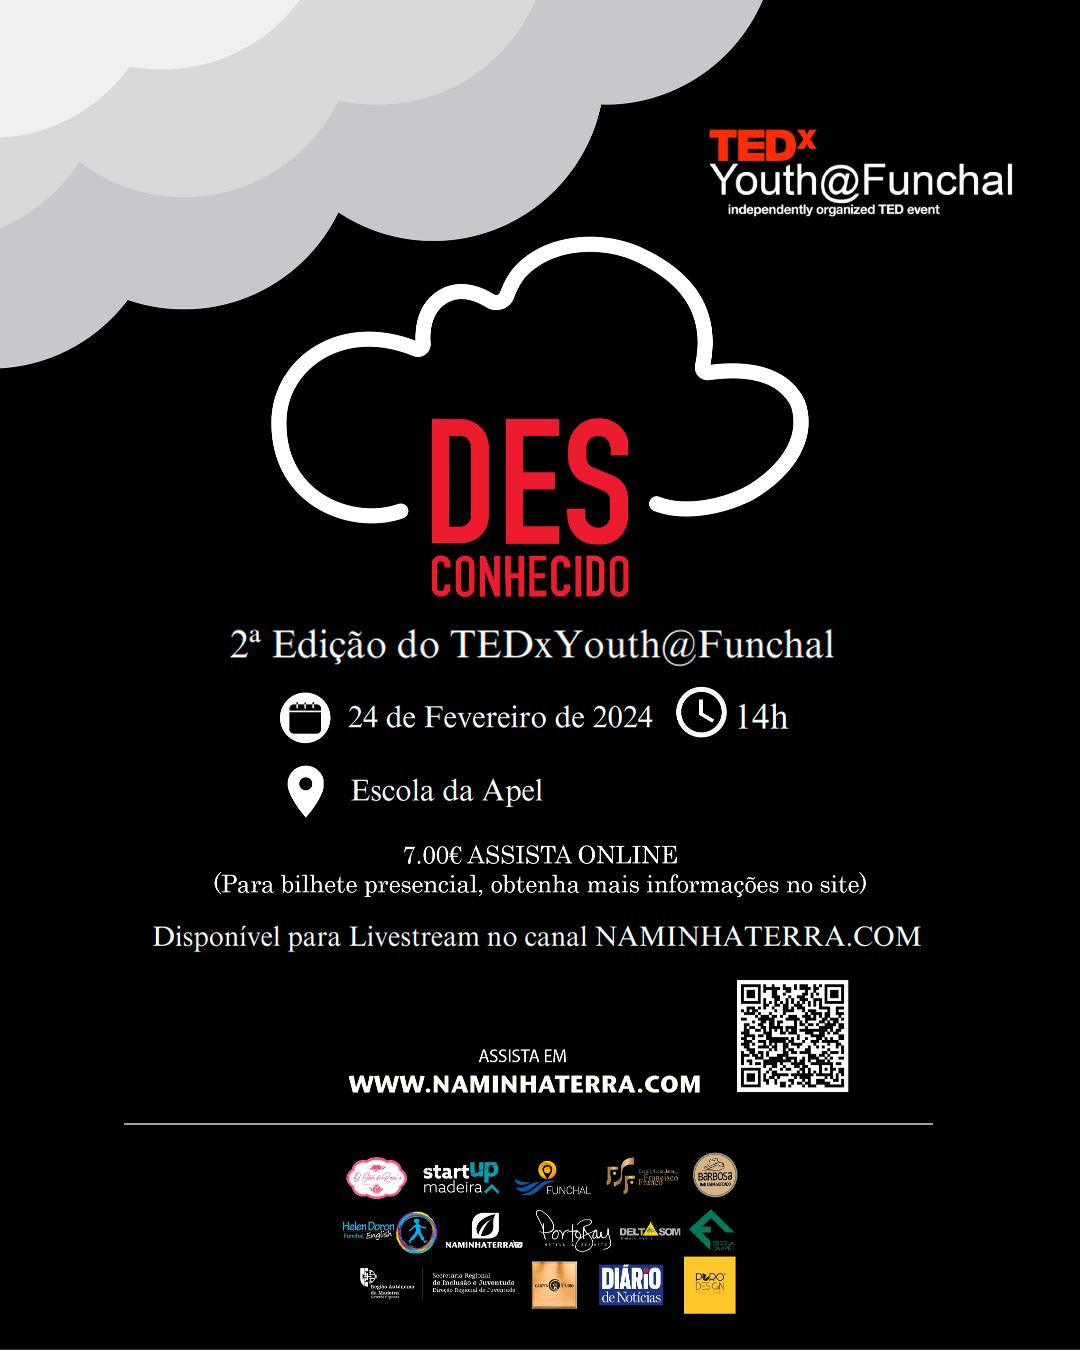 TEDx Youth@Funchal - Tema: “DESCONHECIDO” 